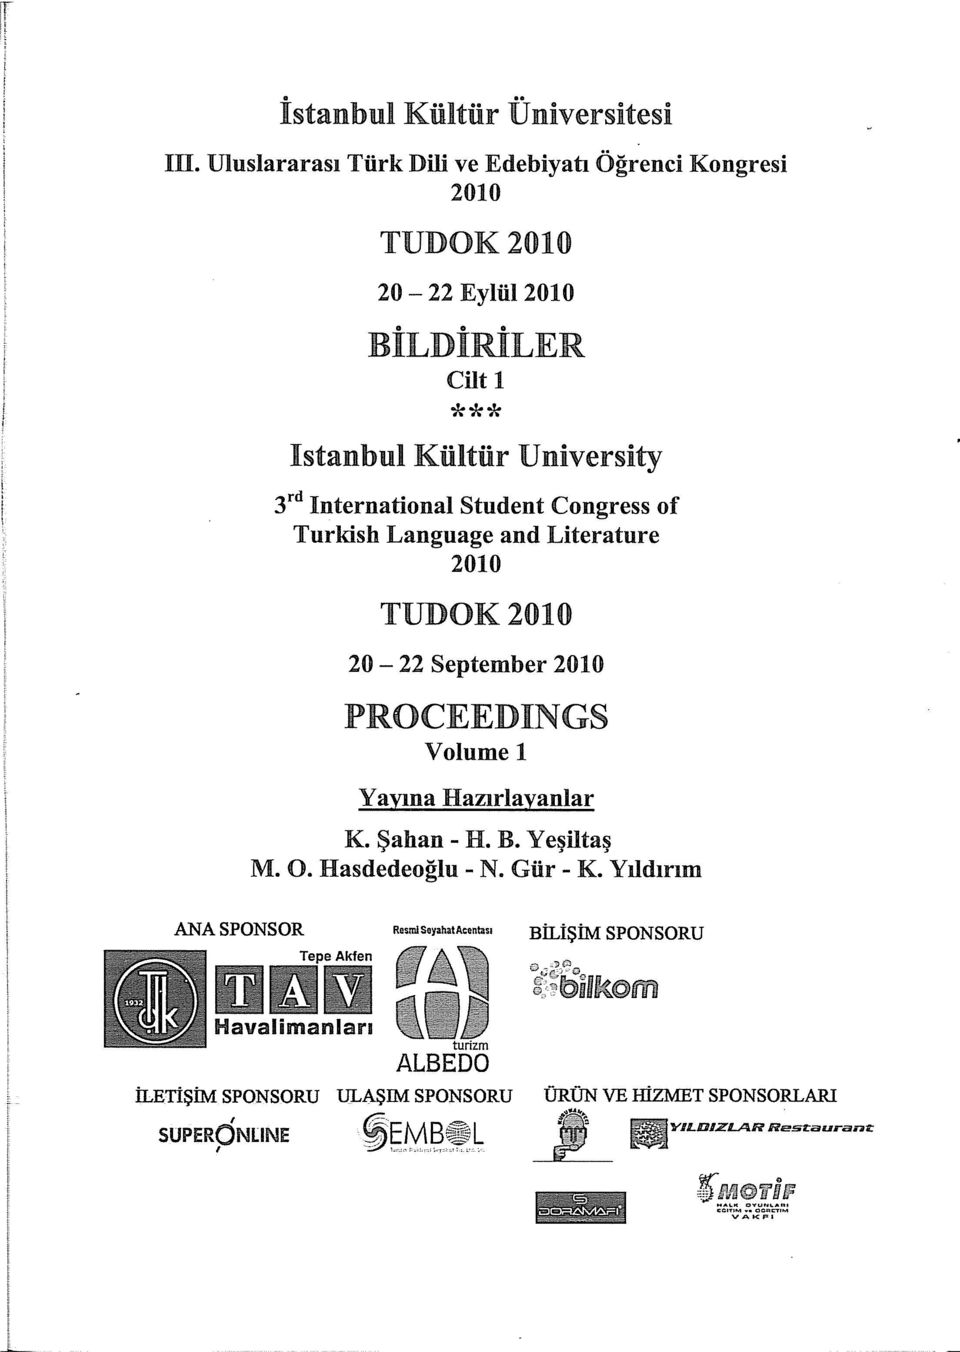 International Student Congress of Turkish Language and Literature 2010 TUDOK2010 20-22 September 2010 PROCEEDINGS Volume 1 Yayına Hazırlayanlar